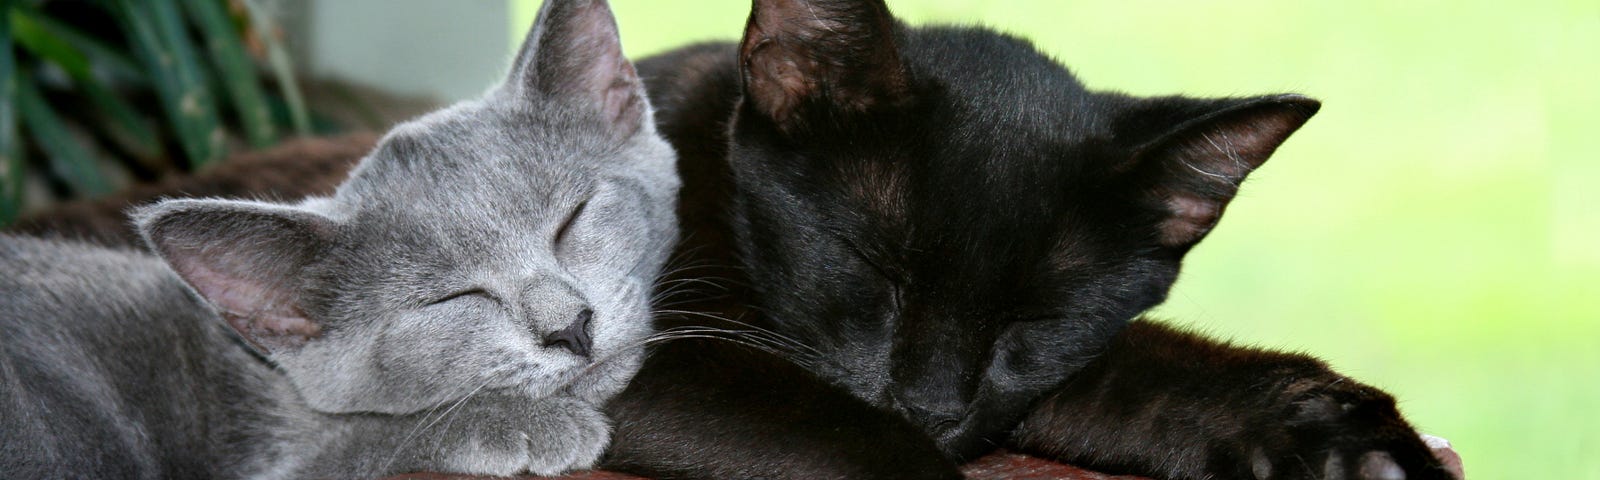 A grey kitten and a black cat sleeping.